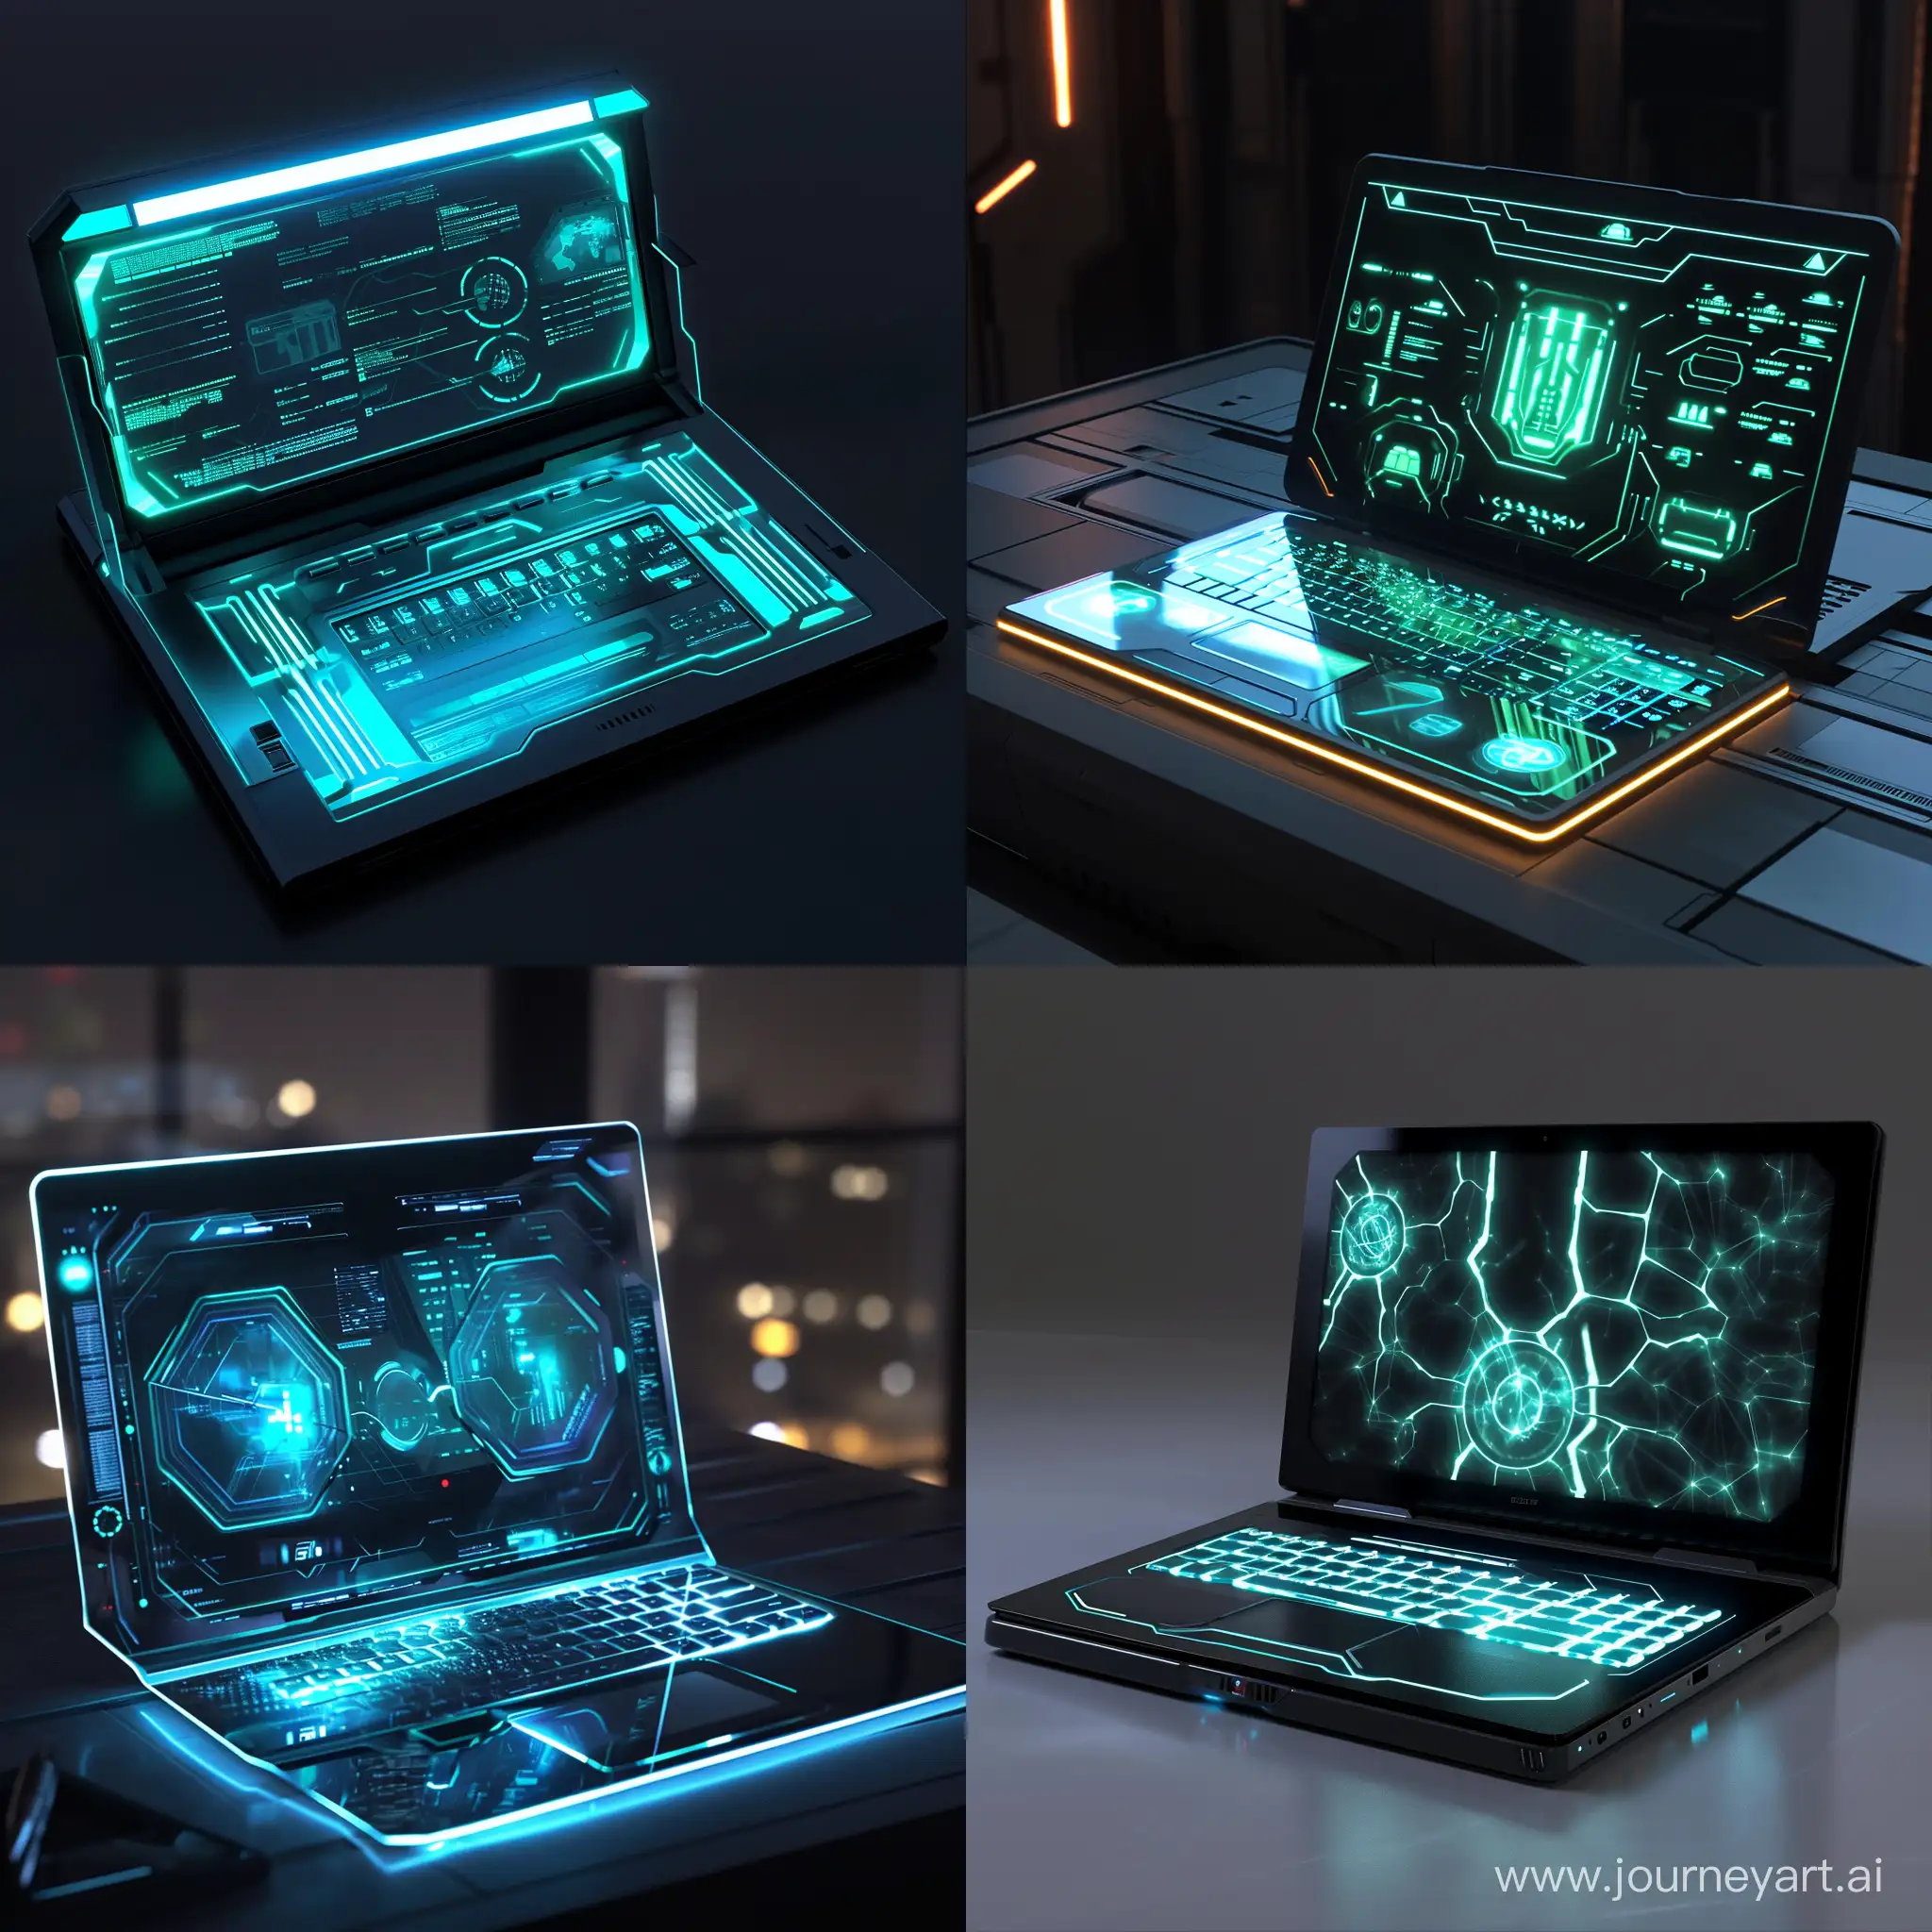 Futuristic-Laptop-with-Bioluminescent-Displays-SciFi-Art